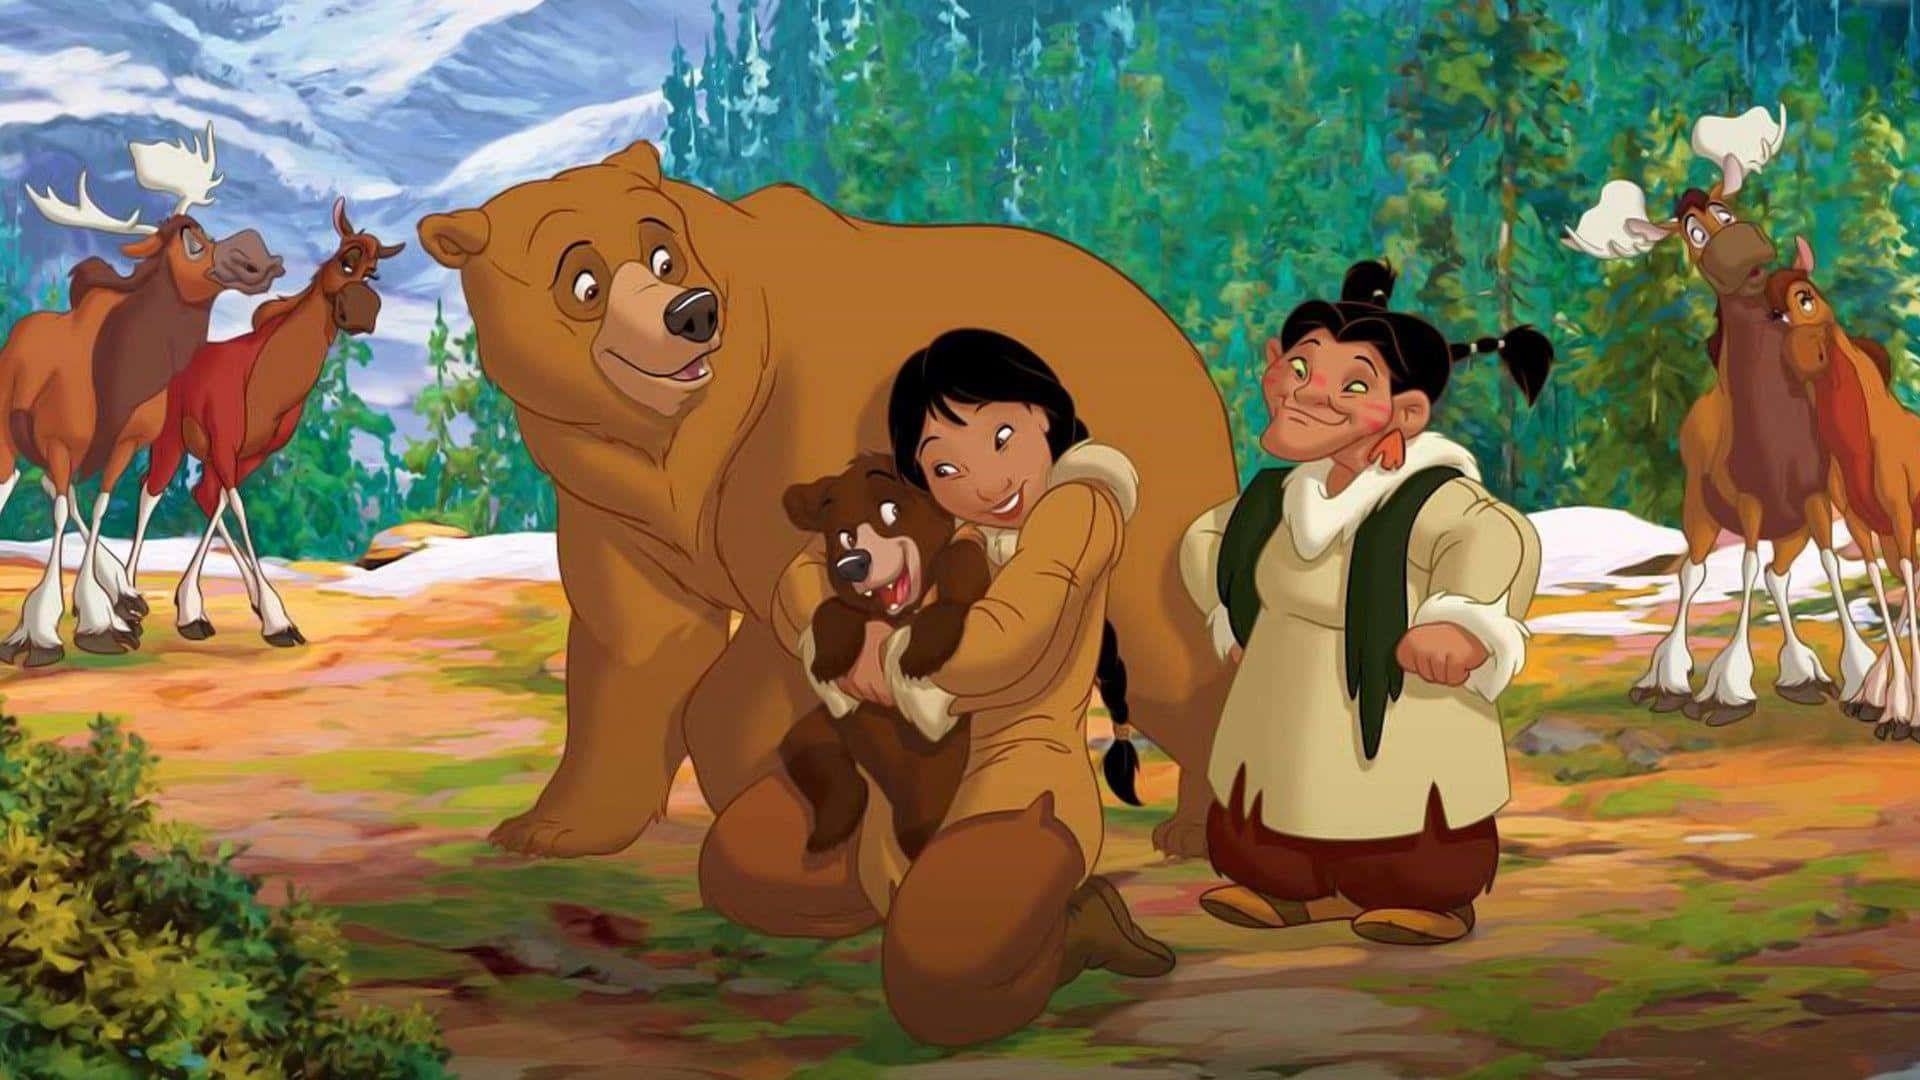 Disney's Brother Bear; a heartwarming journey